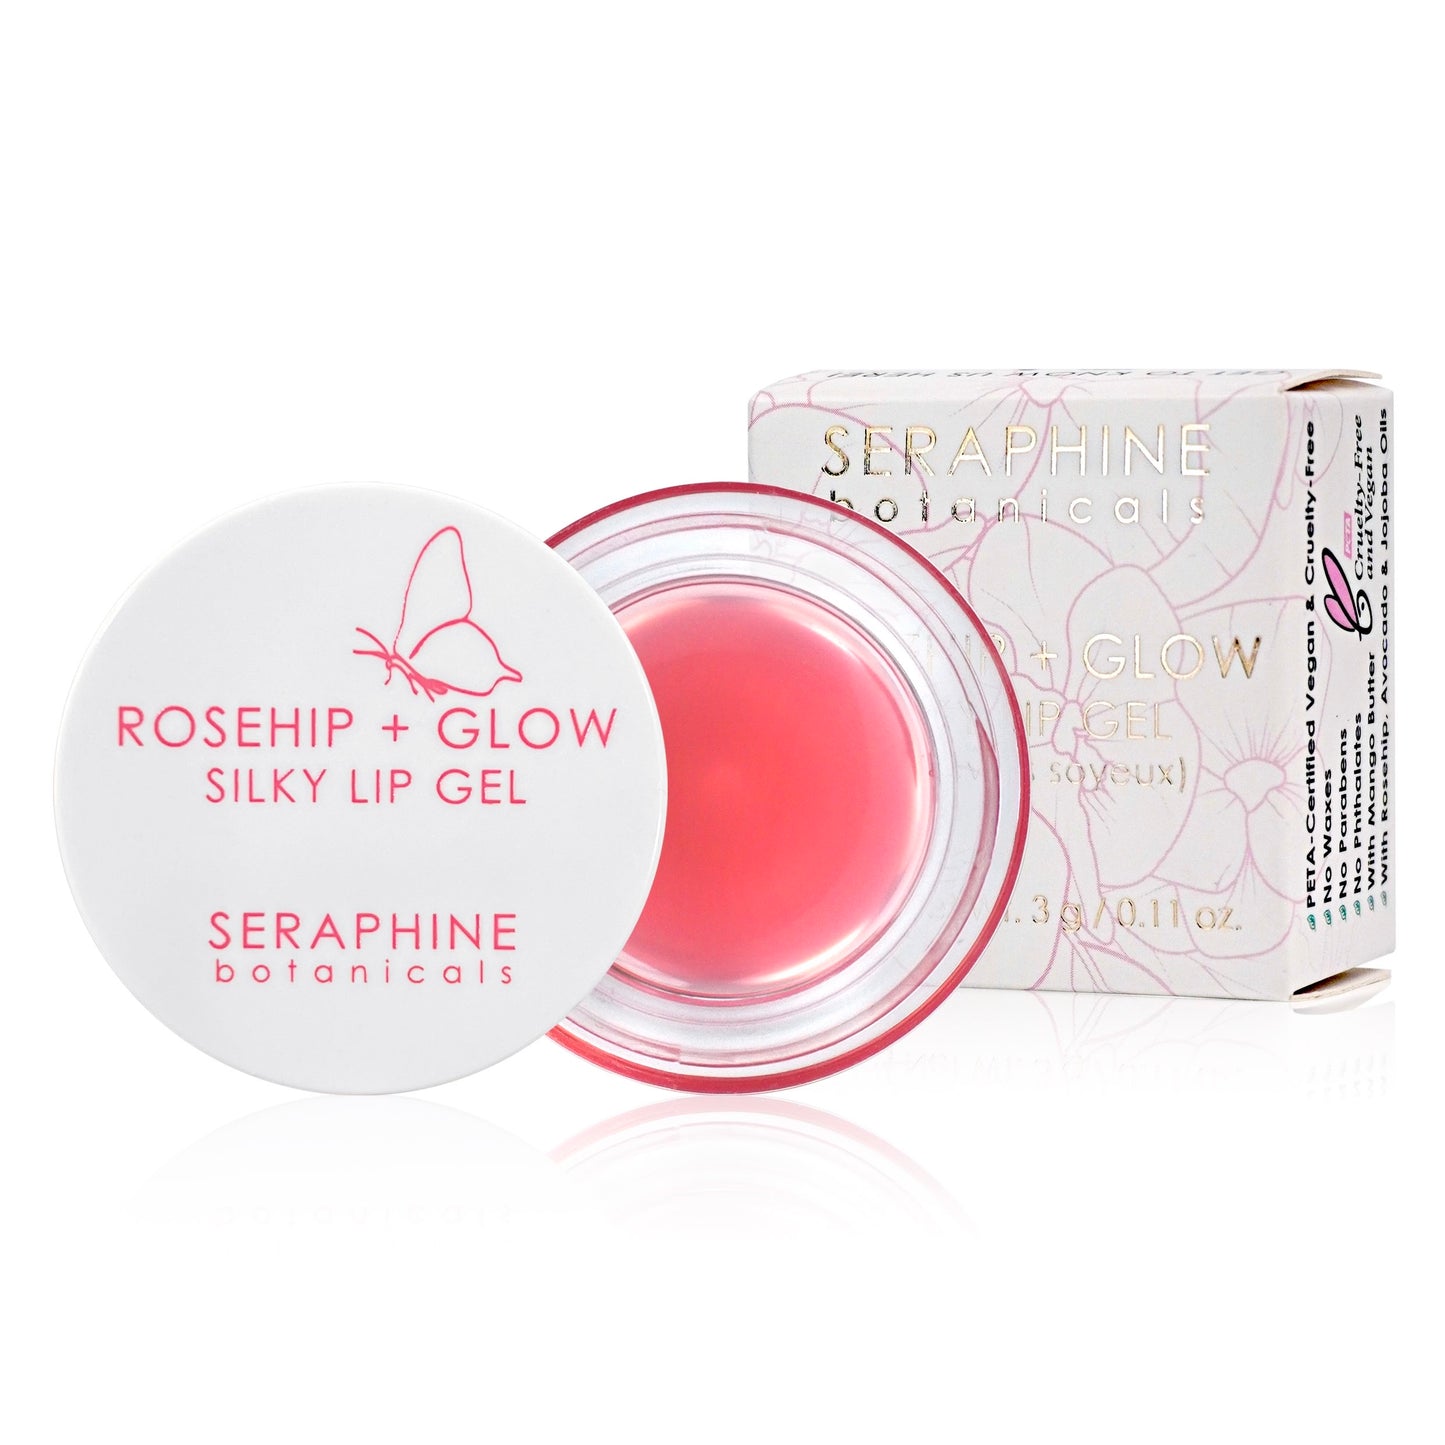 Rosehip + Glow - Silky Lip Gel